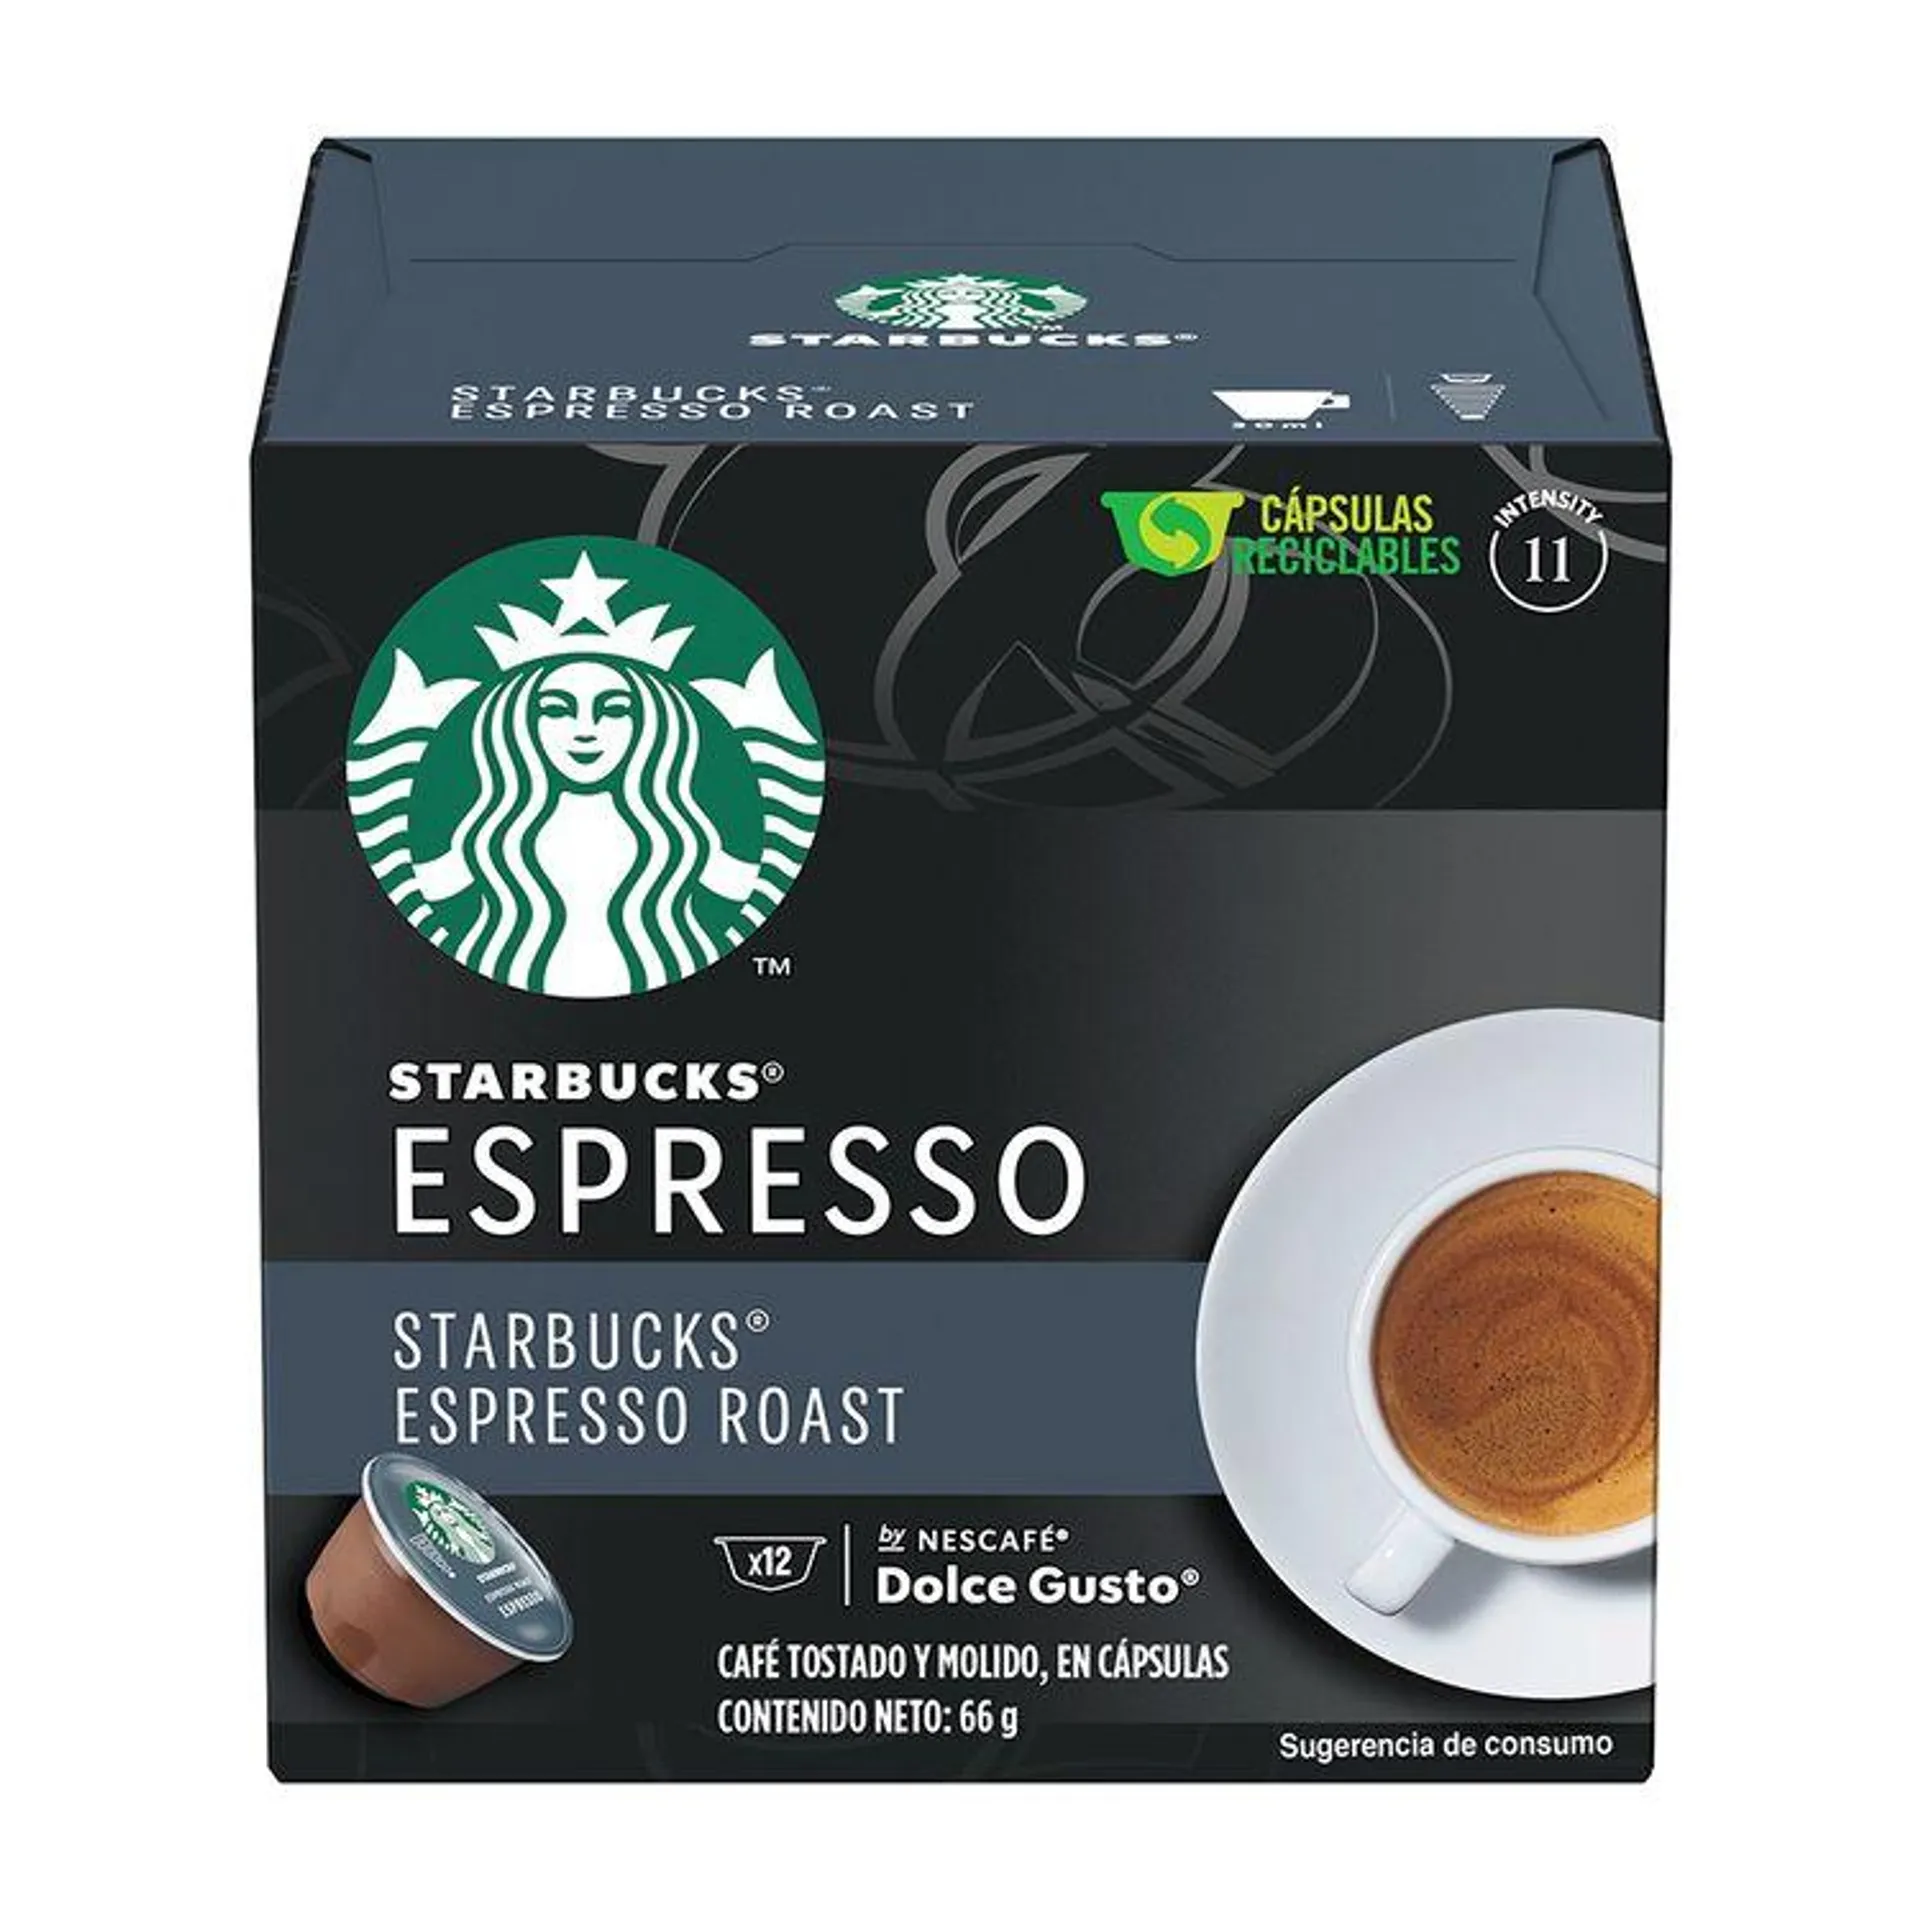 Cápsula Nescafé Starbucks Espresso Roast - 1 pieza